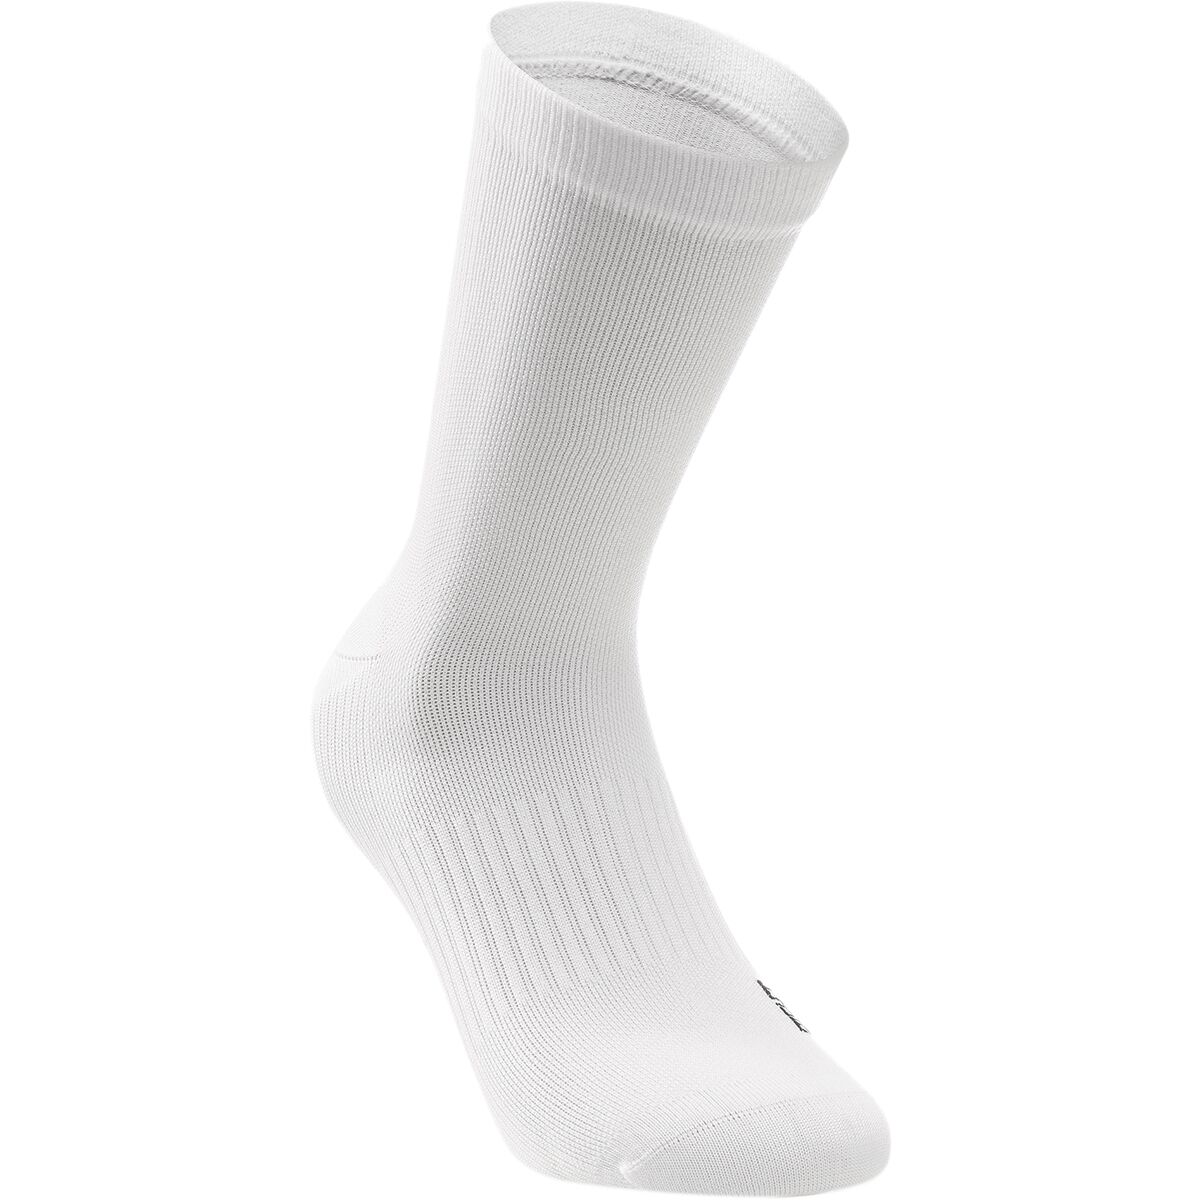 Assos Essence High Sock - 2-Pack holyWhite, 0 - Men's